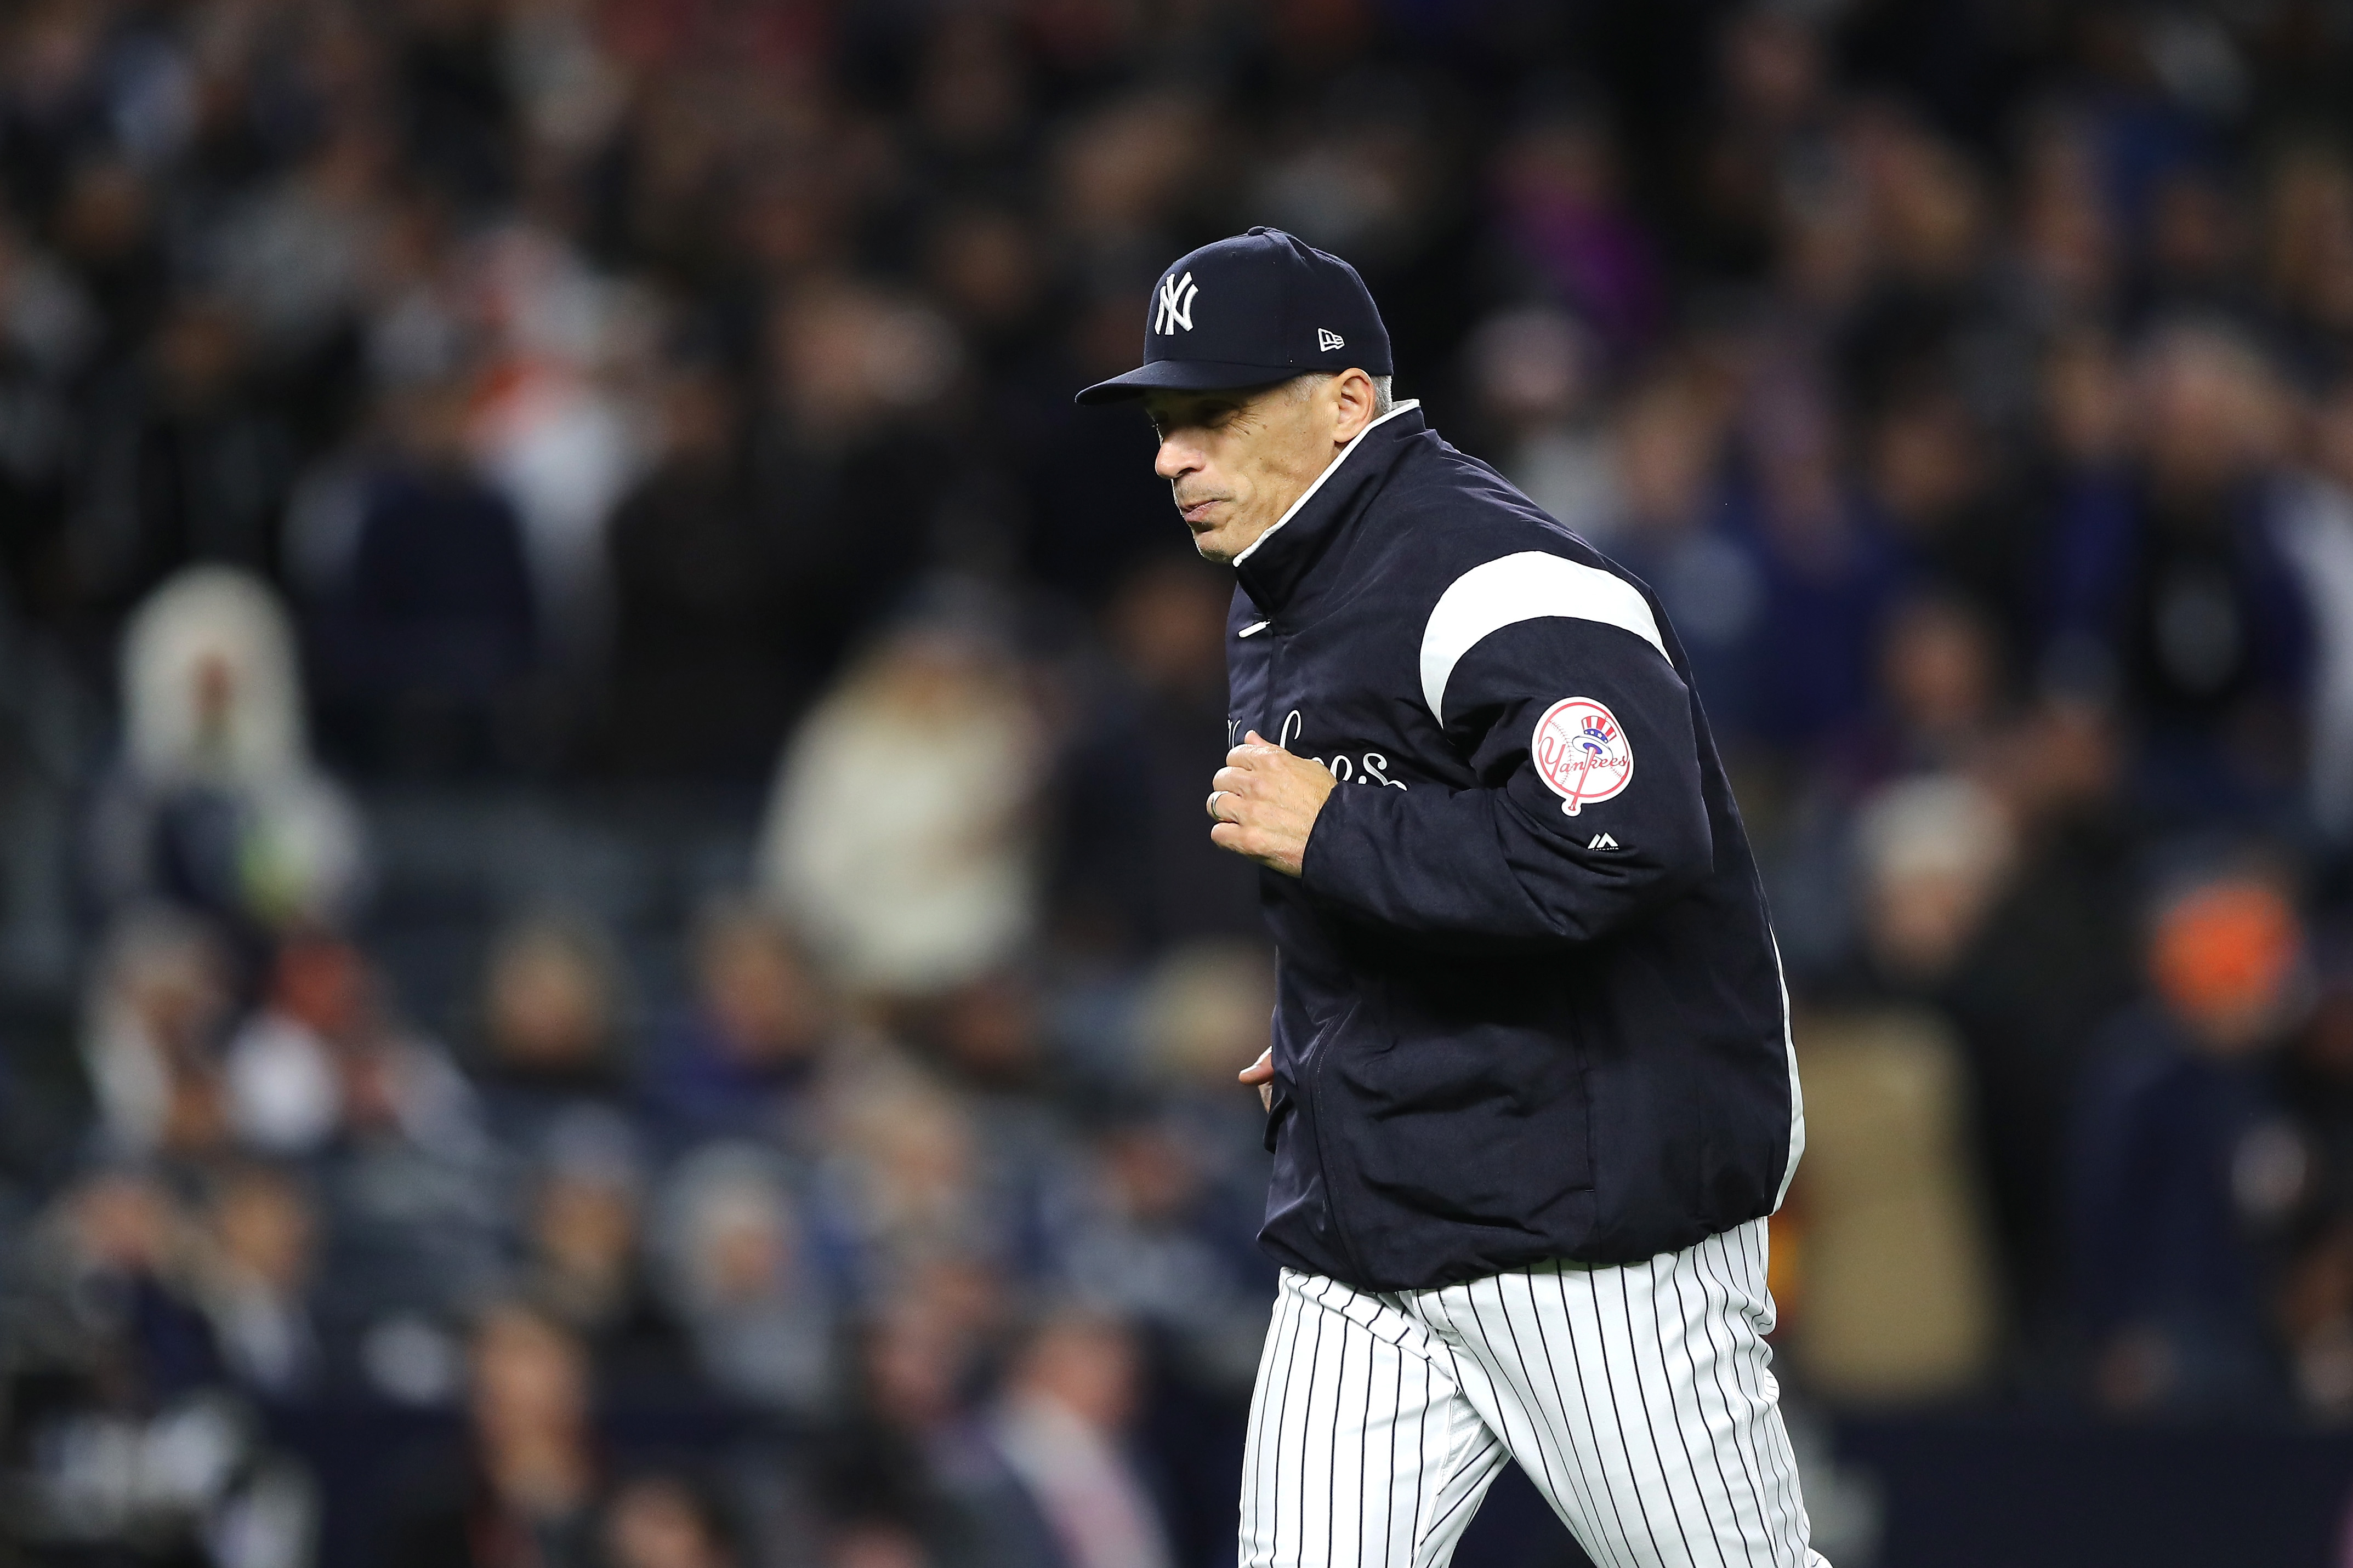 Girardi will not return as Yankees manager